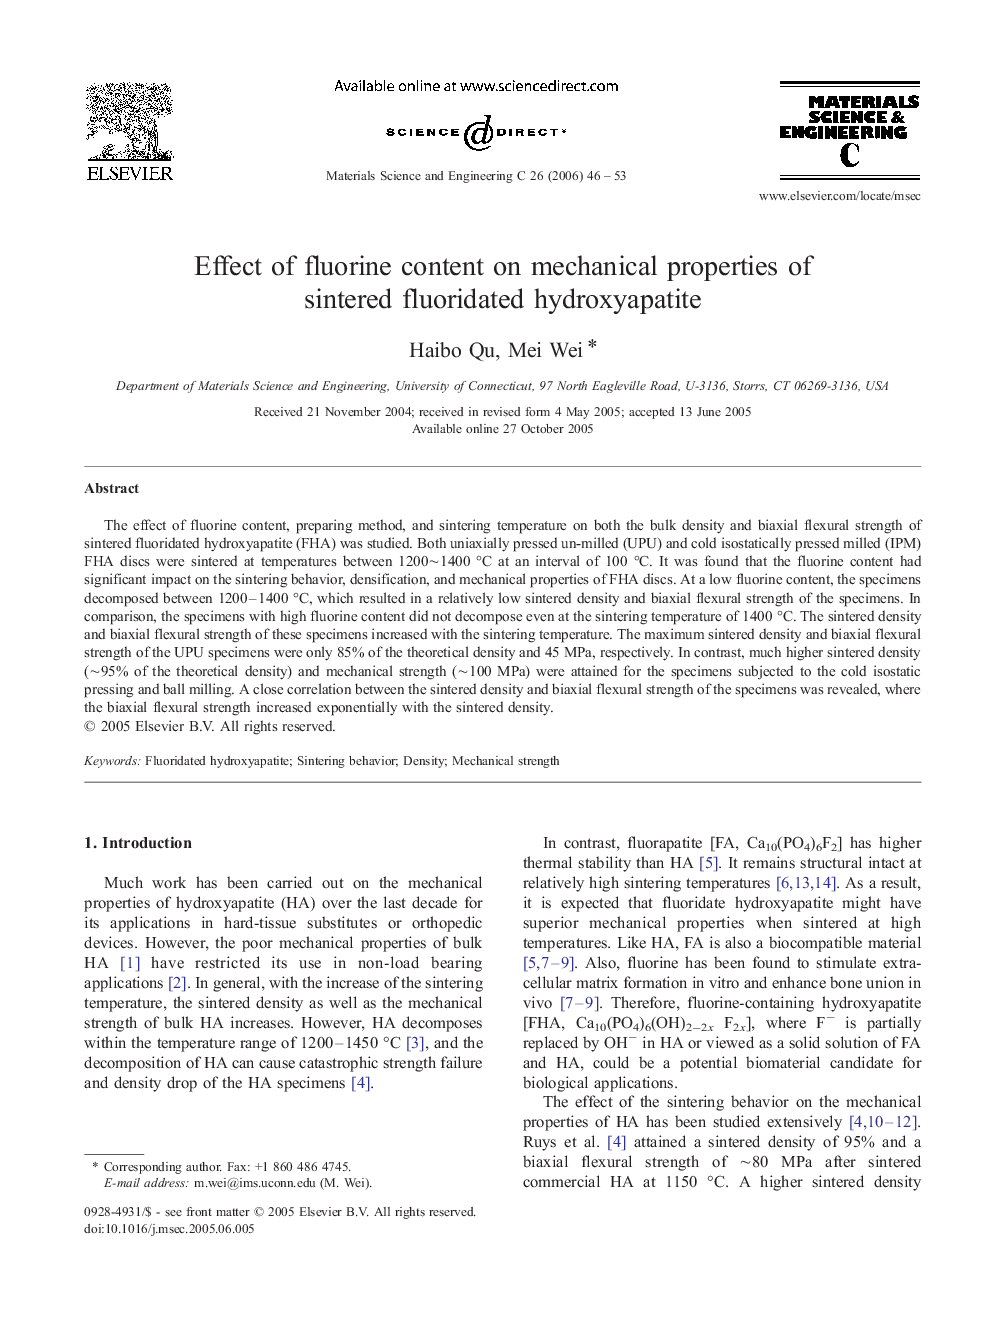 Effect of fluorine content on mechanical properties of sintered fluoridated hydroxyapatite